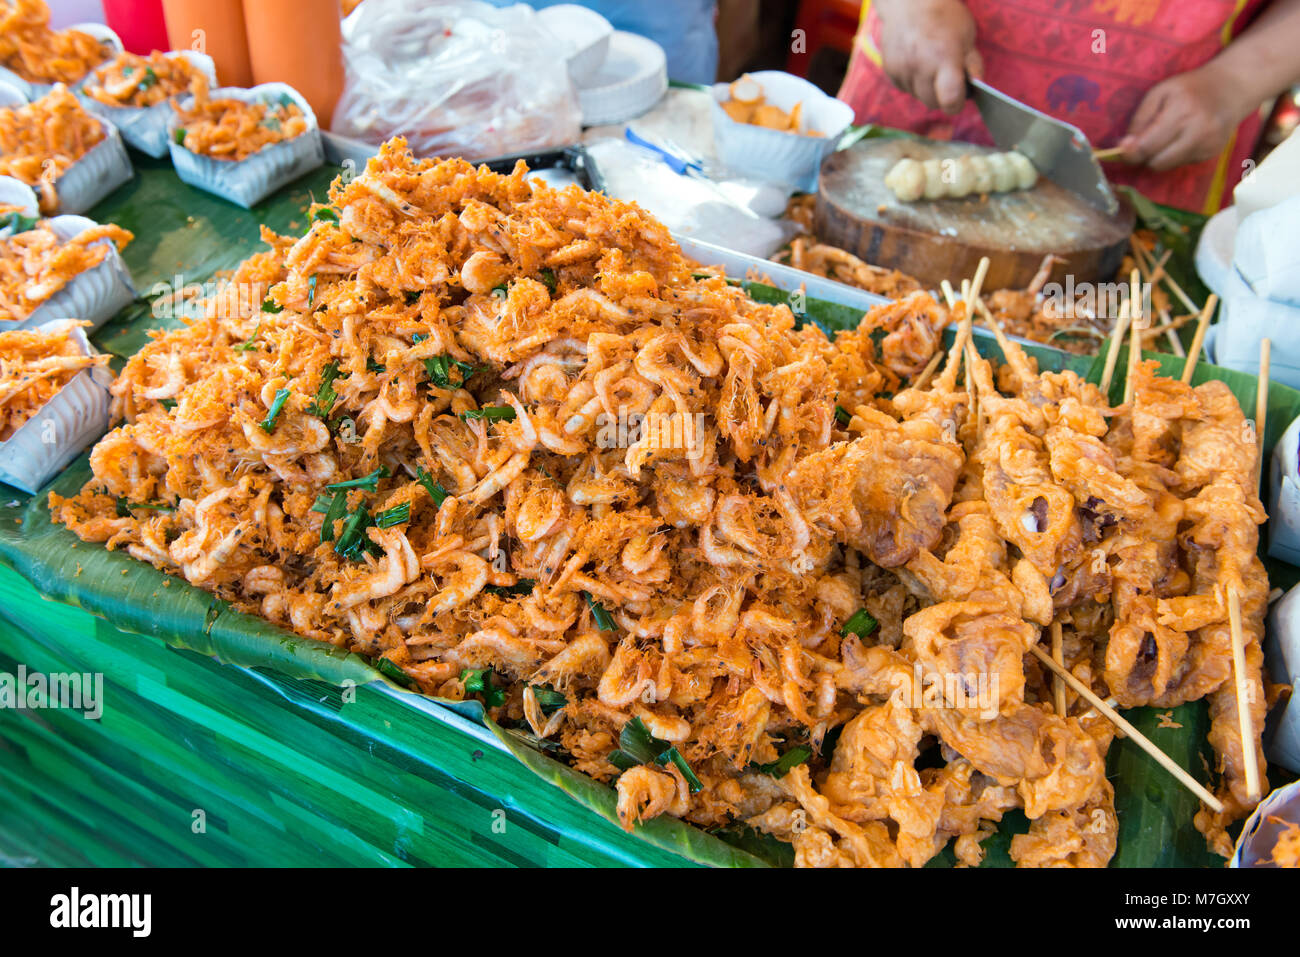 Thailand berühmten Street Food frittierte Garnelen oder Krabben Keks Stockfoto